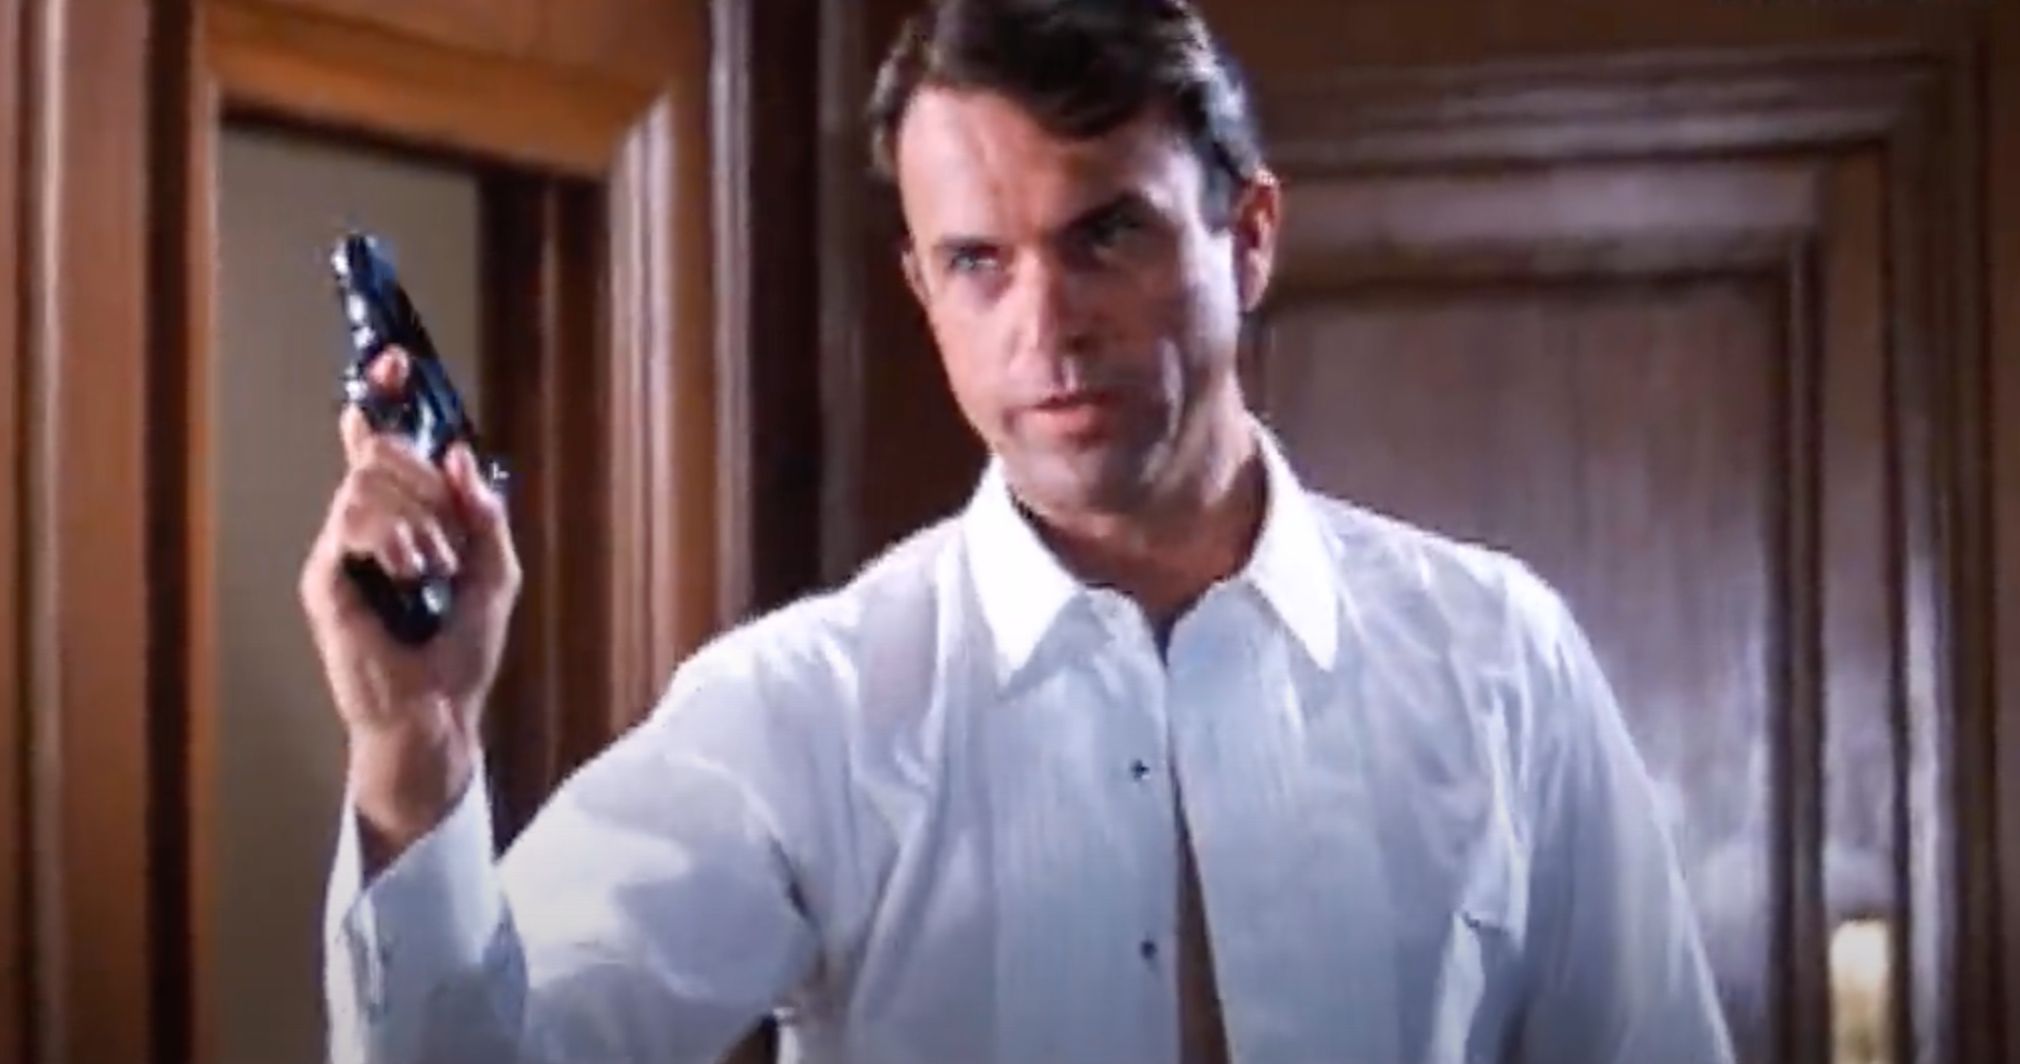 Watch Jurassic Park Star Sam Neill Audition for James Bond in 007 Screen Test